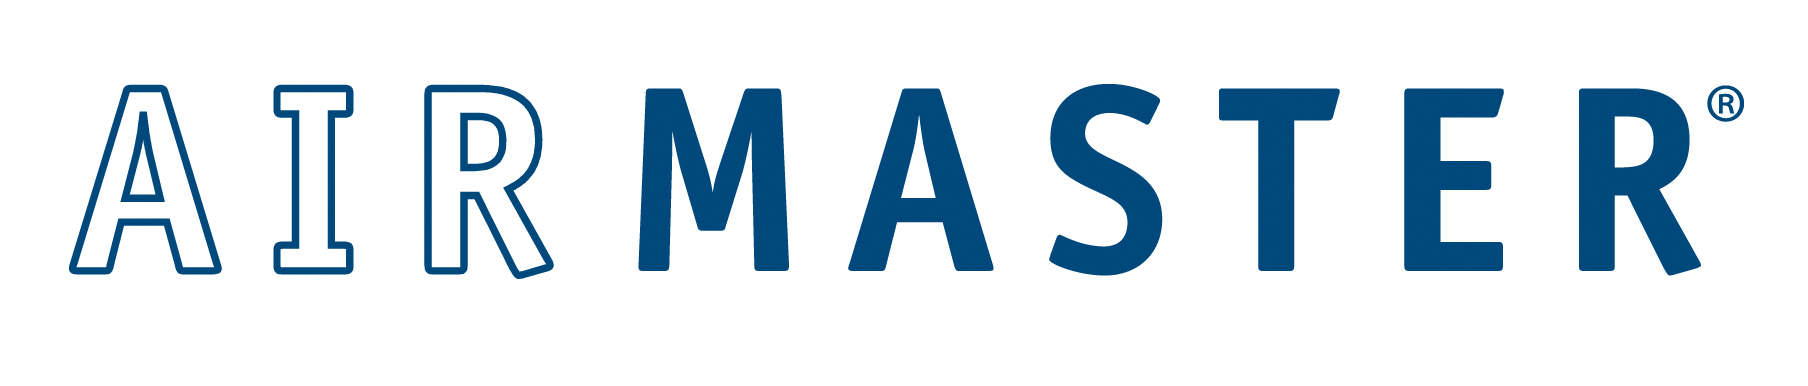 Air Master Logo photo - 1